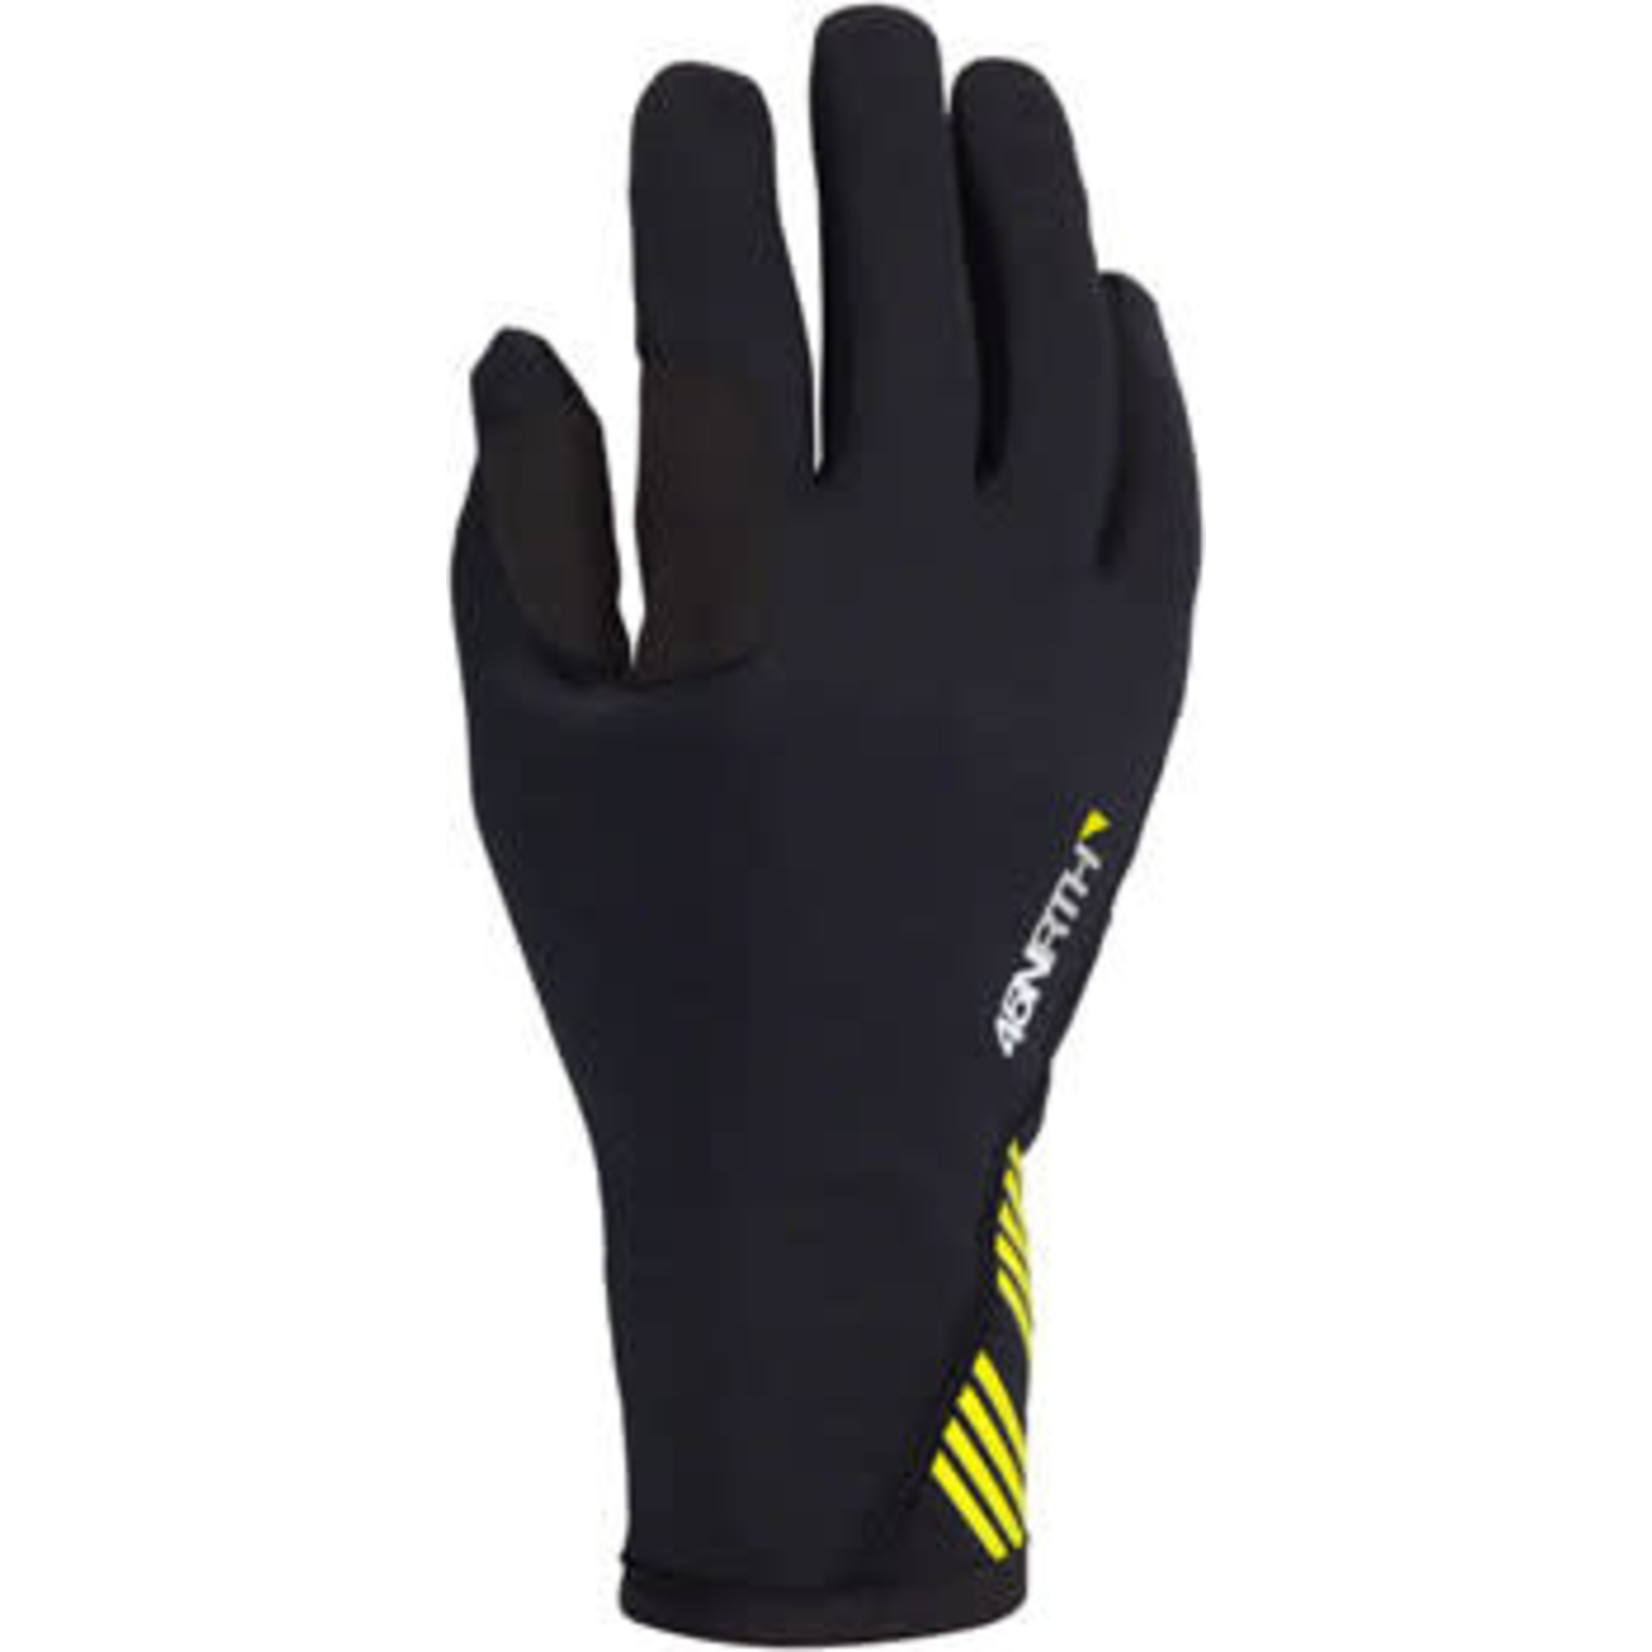 45NRTH 45NRTH Risor Merino Liner Gloves - Black Full Finger Medium